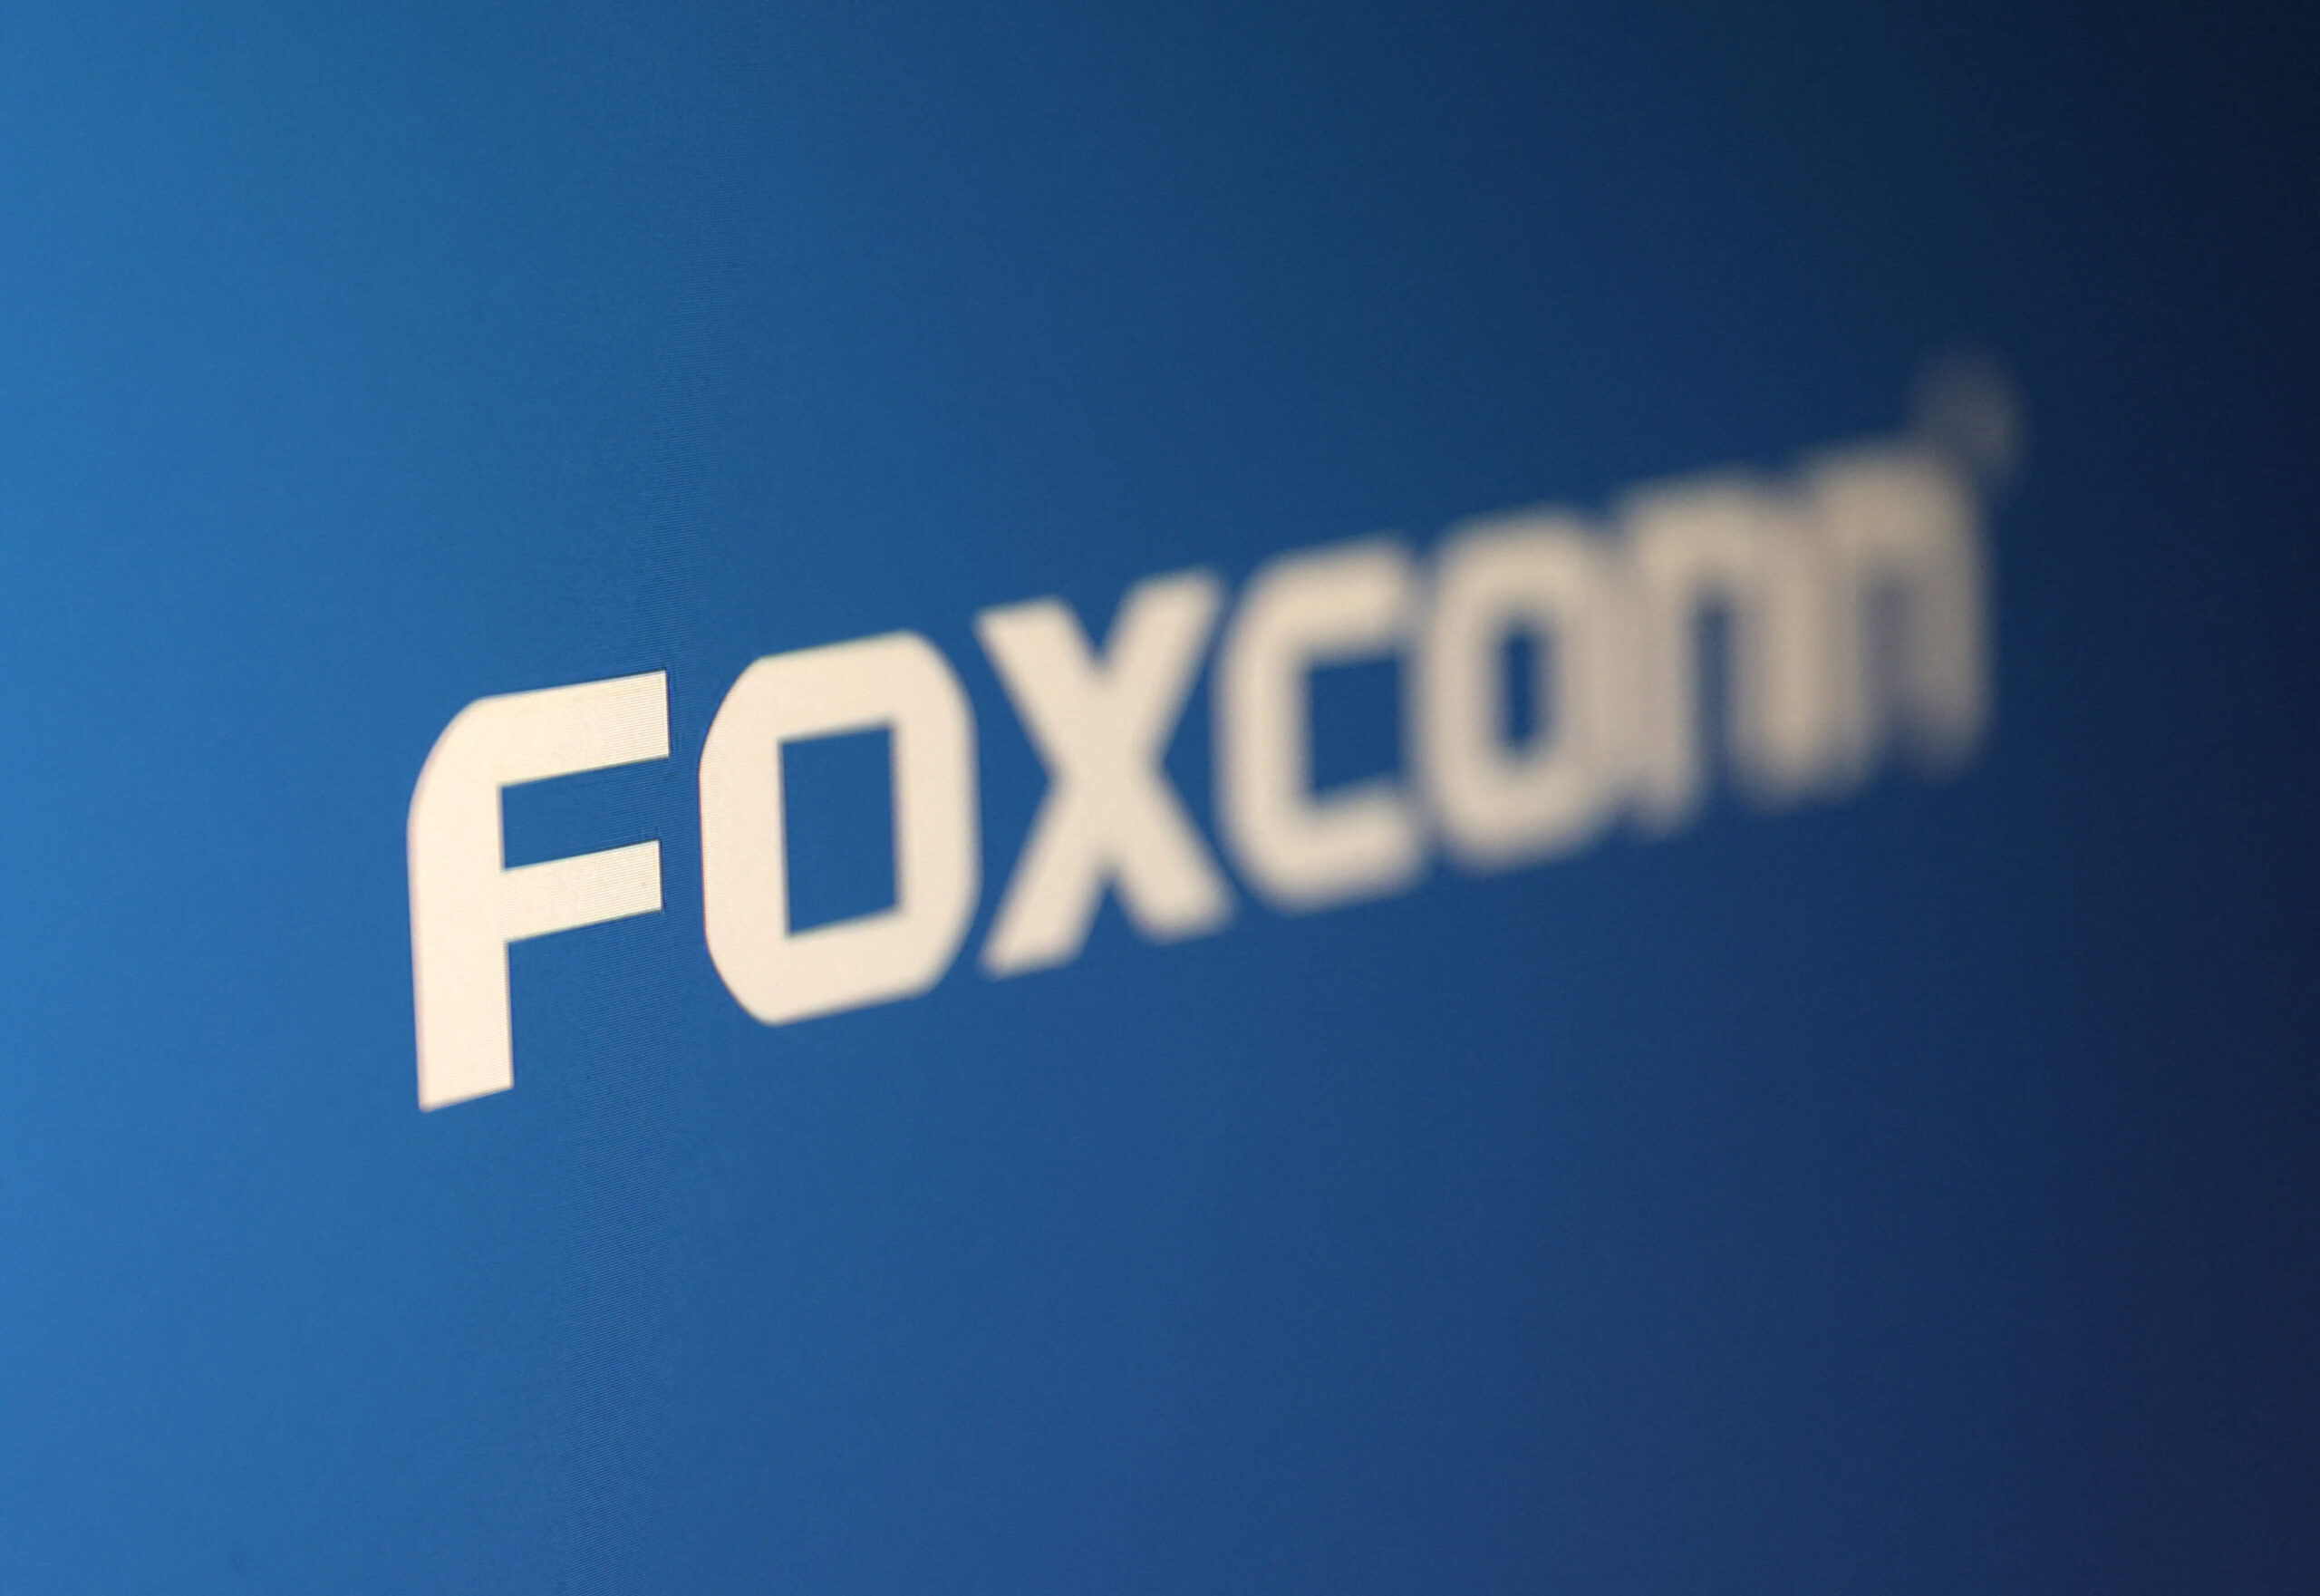 Foxconn Anticipates Robust Holiday Sales in Q4 Despite September Slump